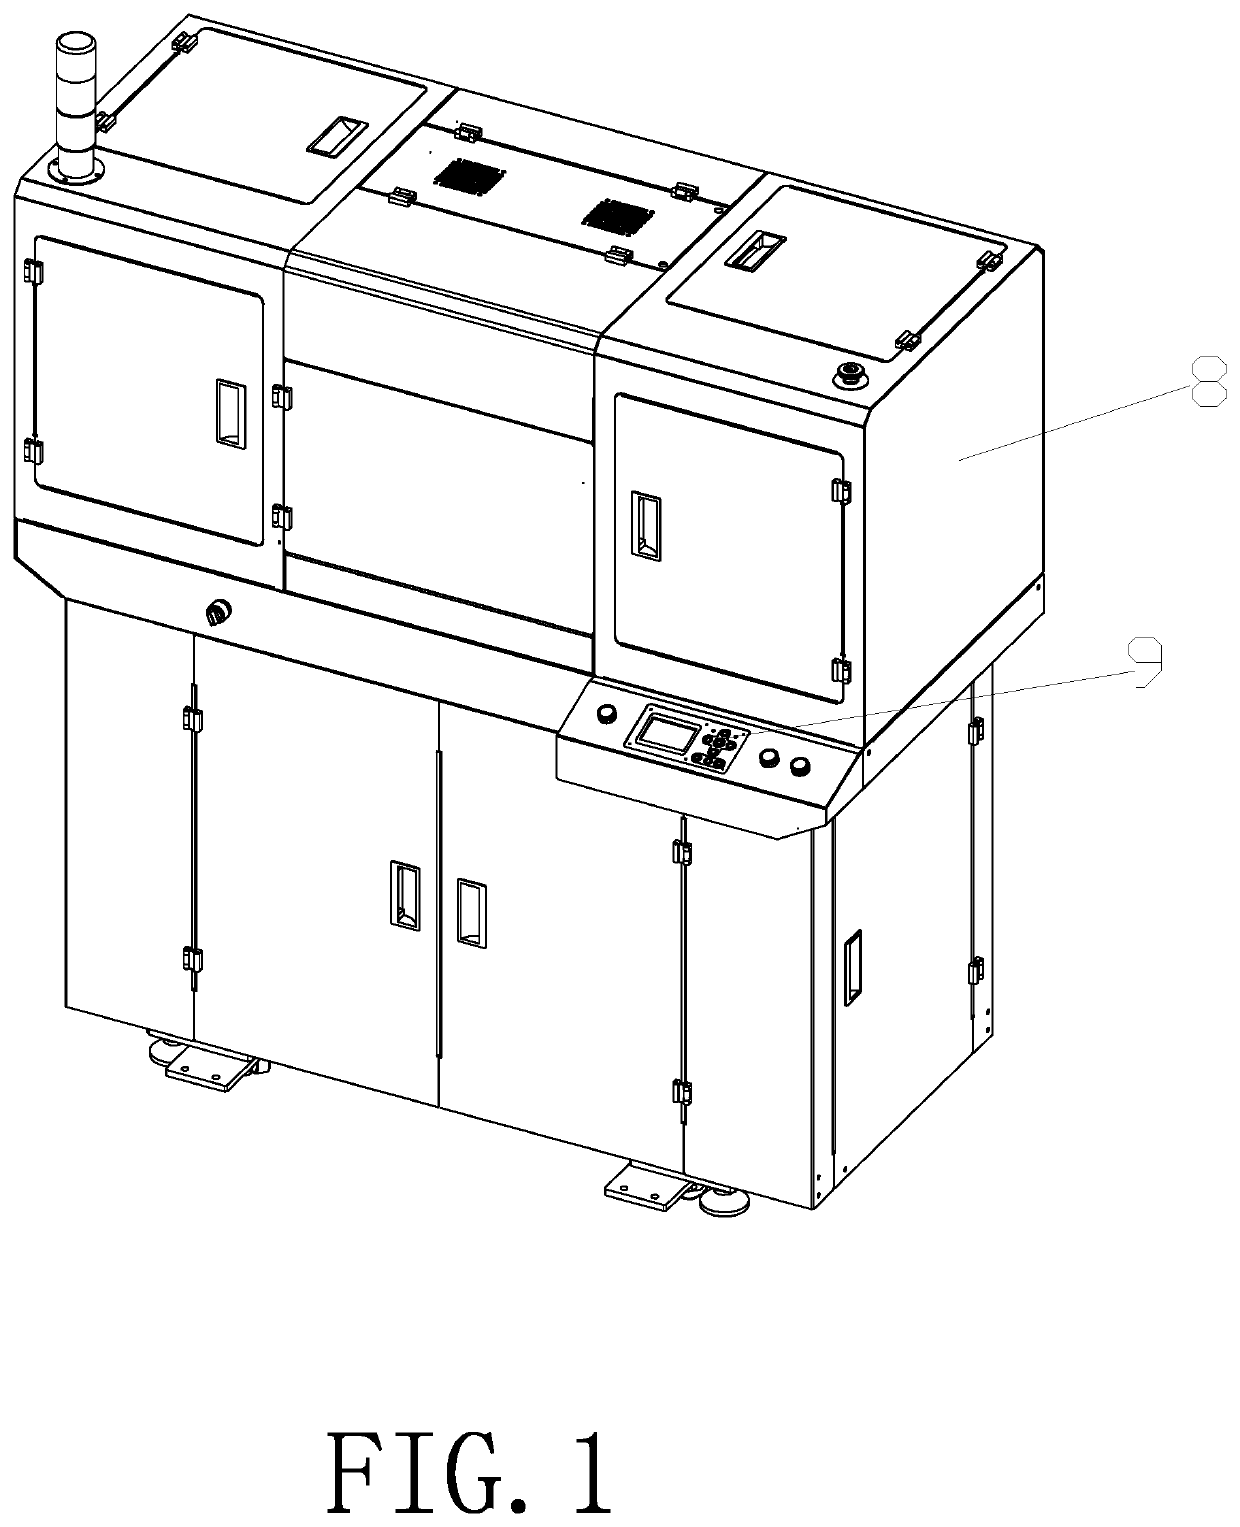 A printing method for inkjet printers